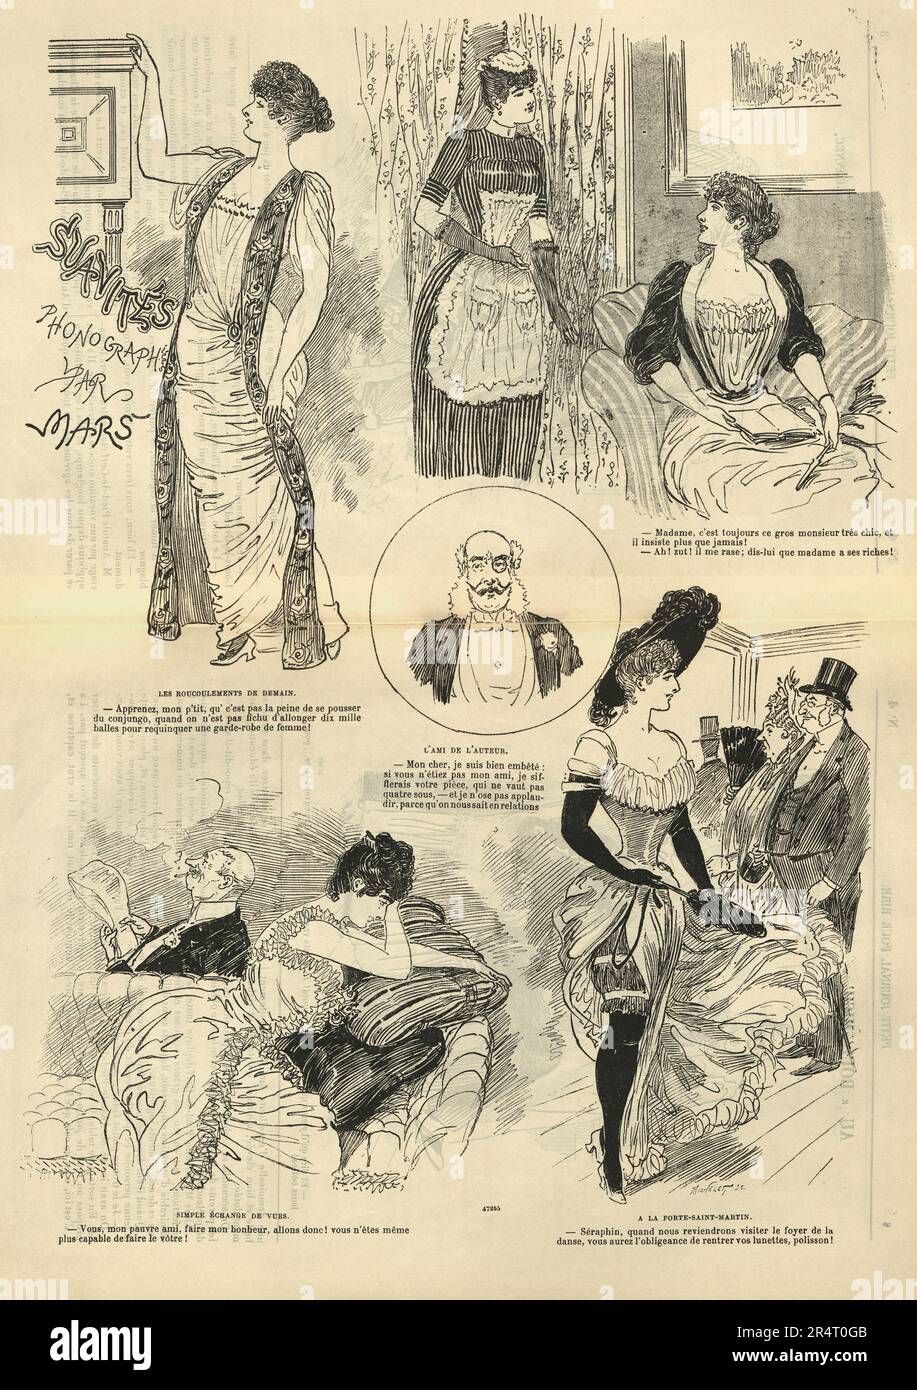 Pagina dal fumetto francese d'epoca, Cartoon, fonografo Suavités par Mars 1890s, 19th ° secolo Foto Stock